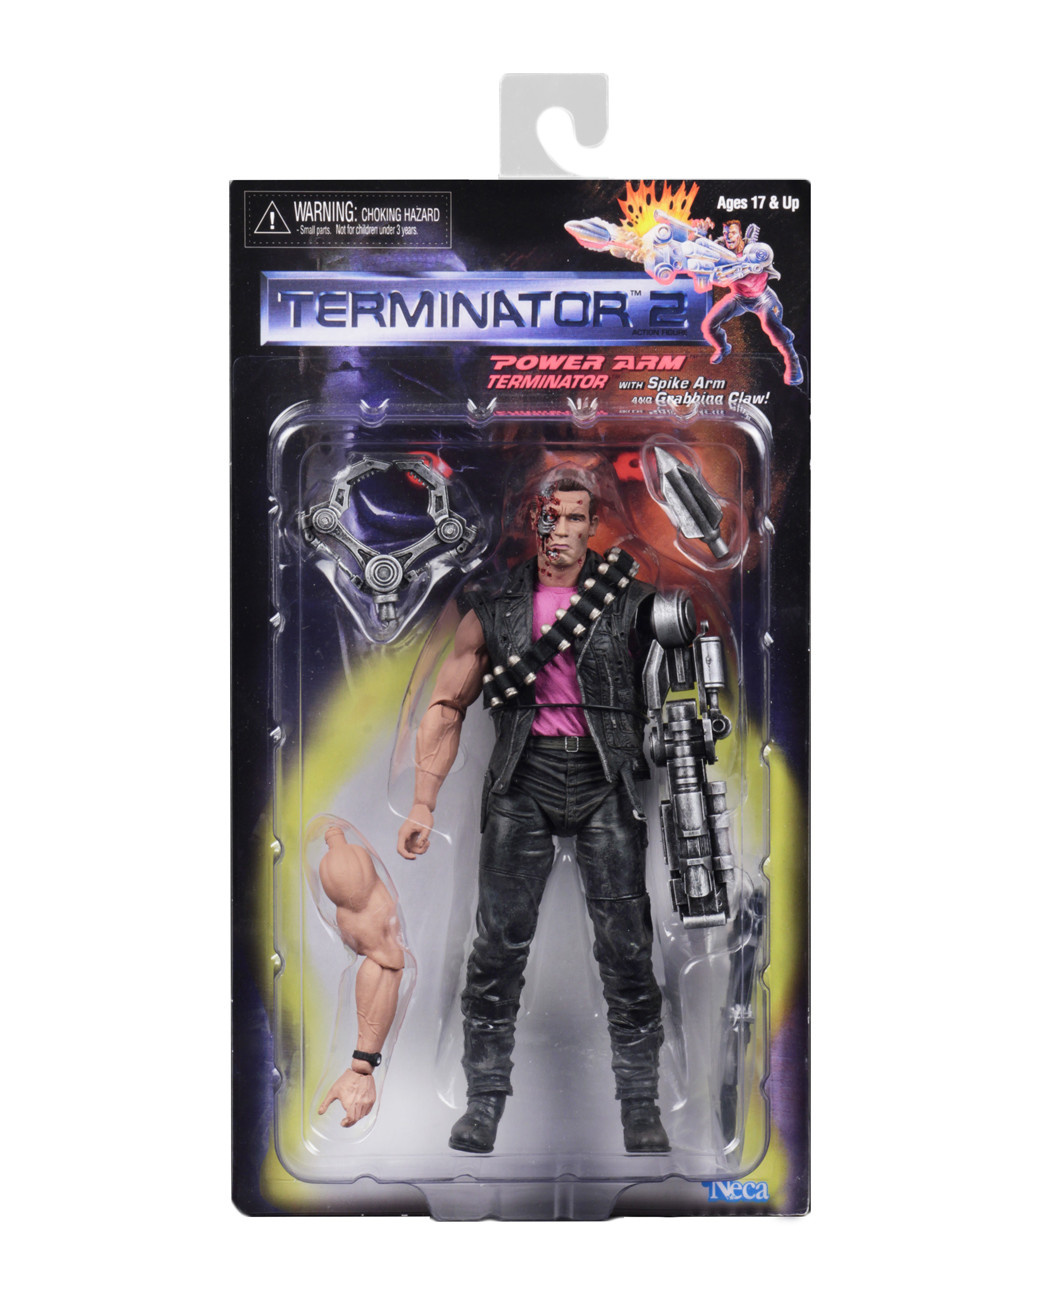 power arm terminator